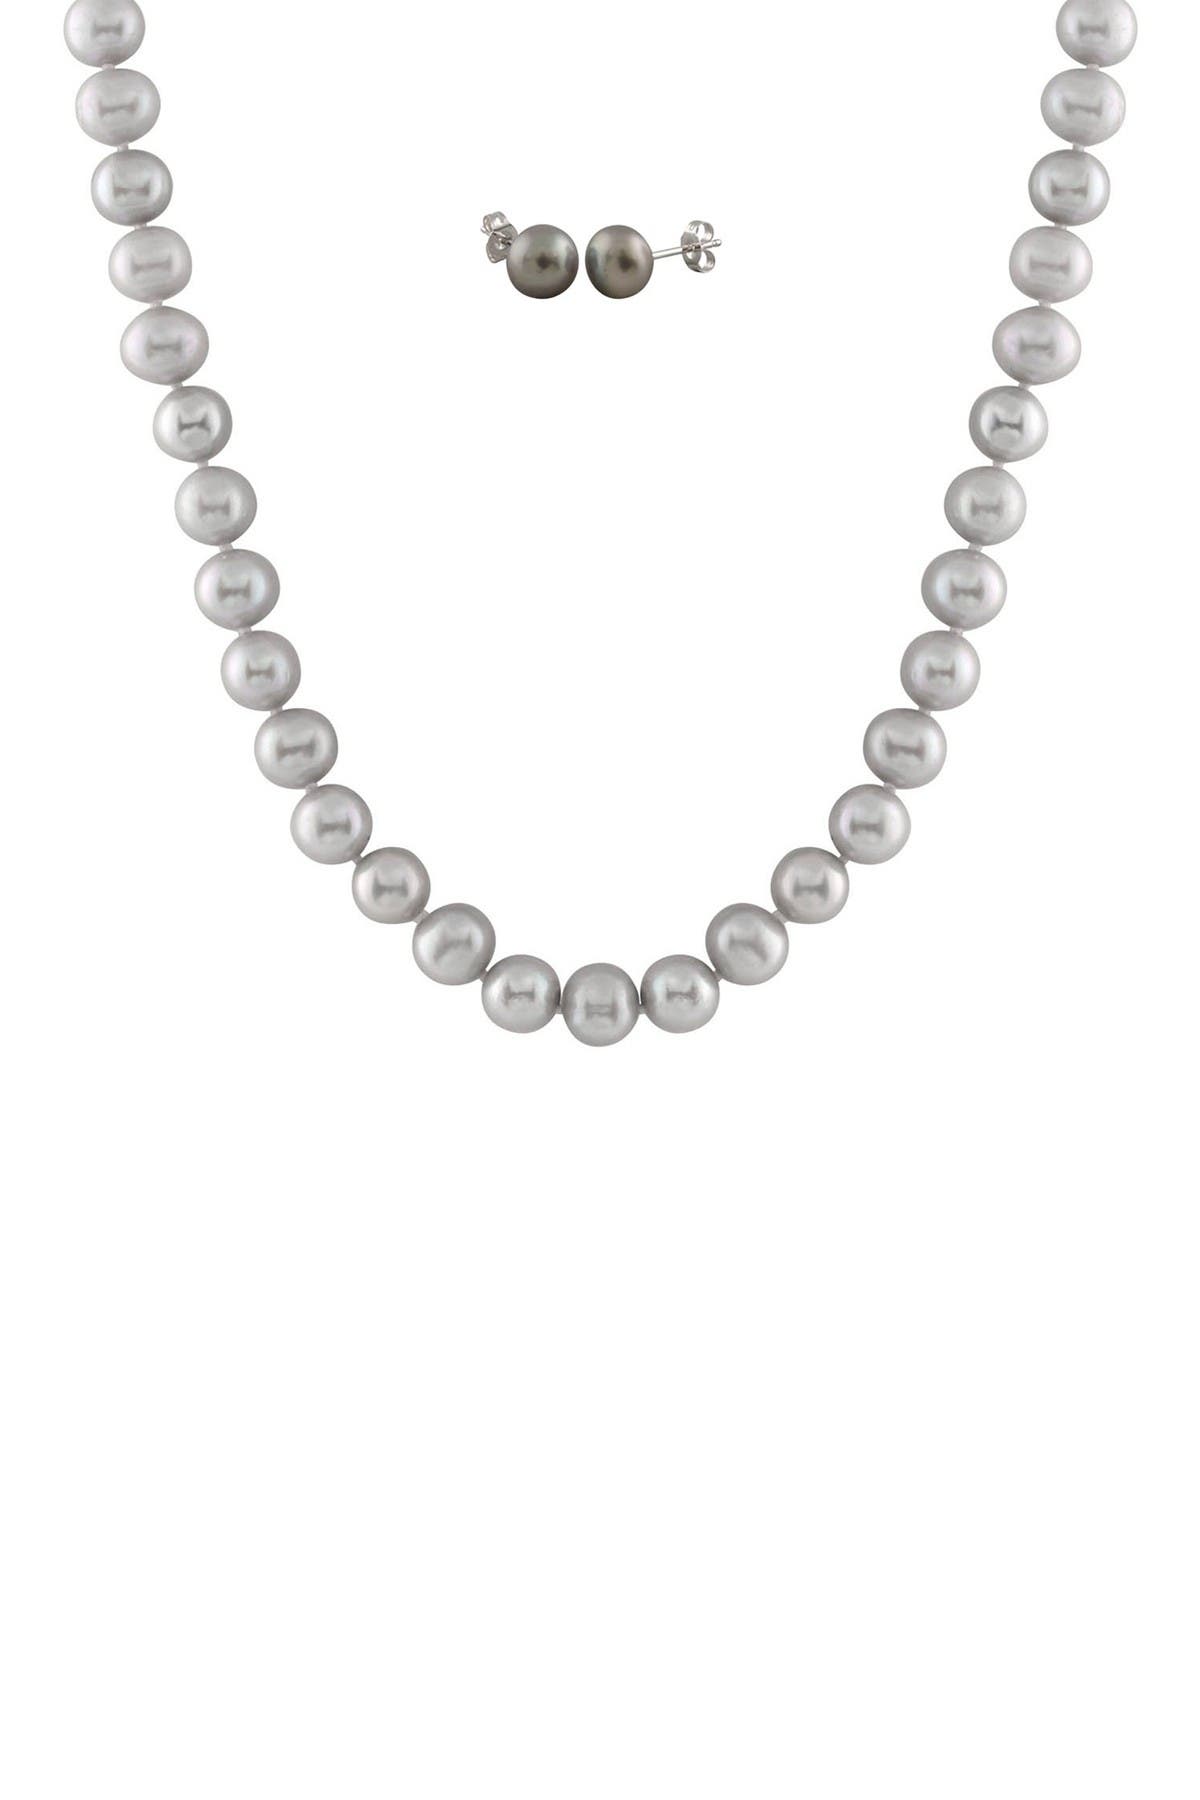 Splendid Pearls 8-8.5mm Freshwater Pearl Necklace & Earrings Set In Gray